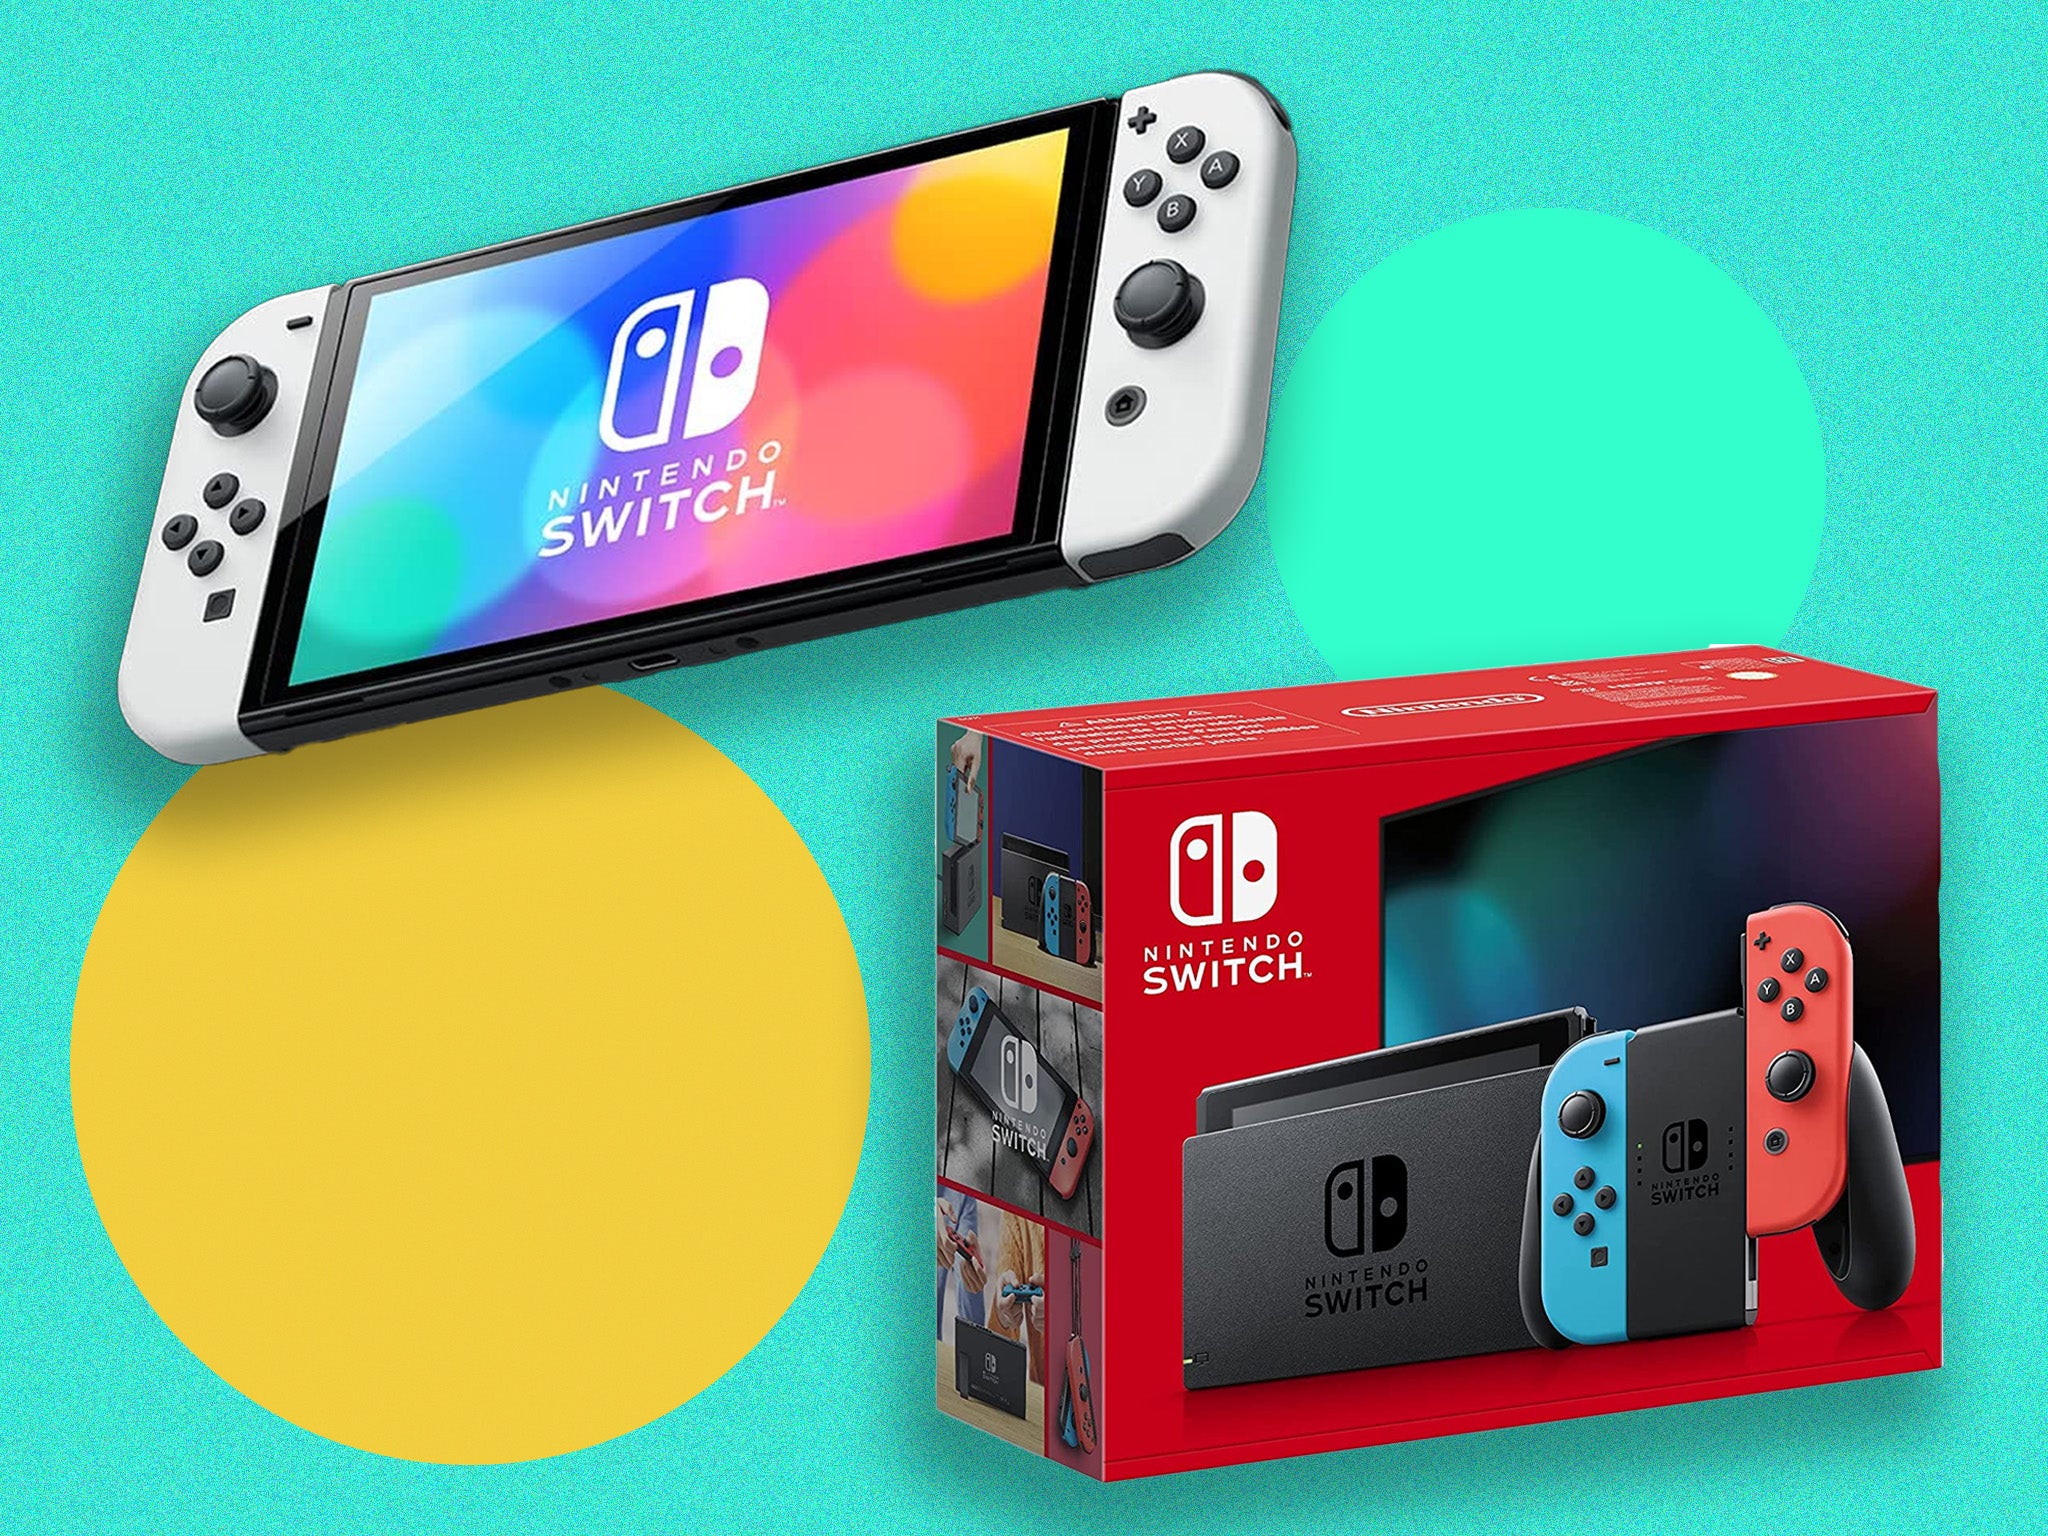 Nintendo Switch Games - Choose a Game or Bundle Up - Bargain Save